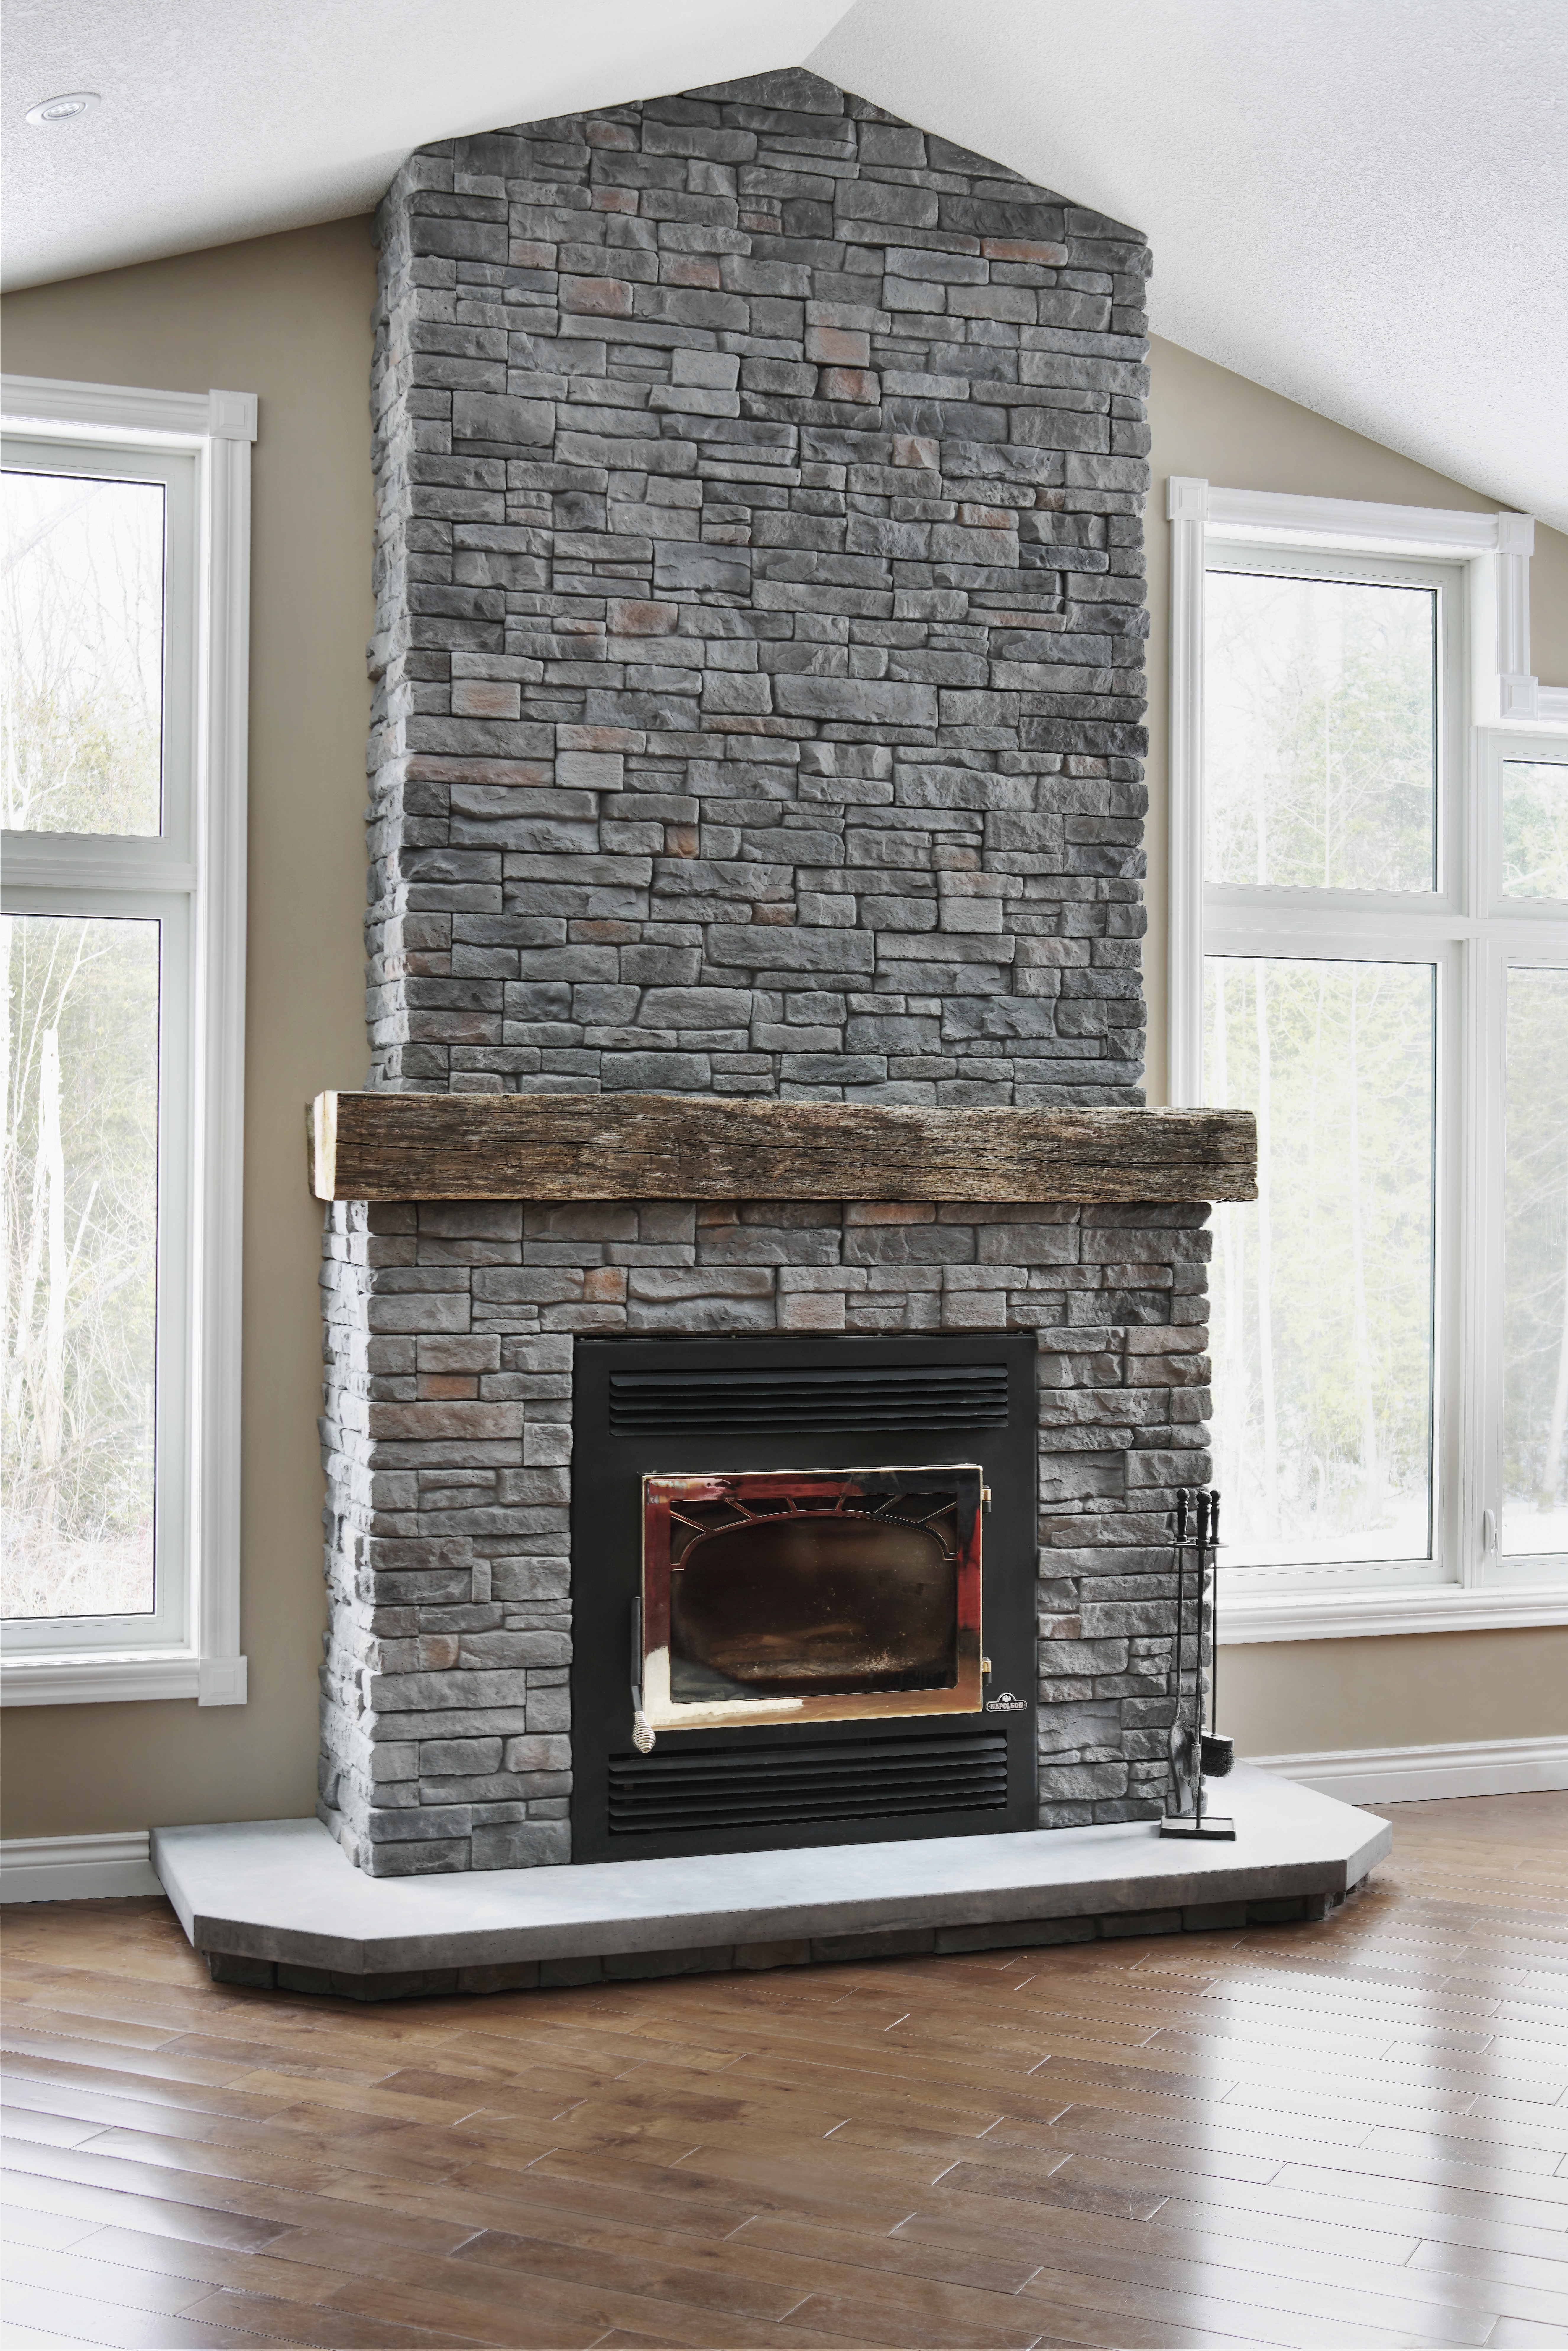 Dry Stack Stone Fireplace Inspirational Exterior & Interior Stone Veneer Diy Design & Ideas